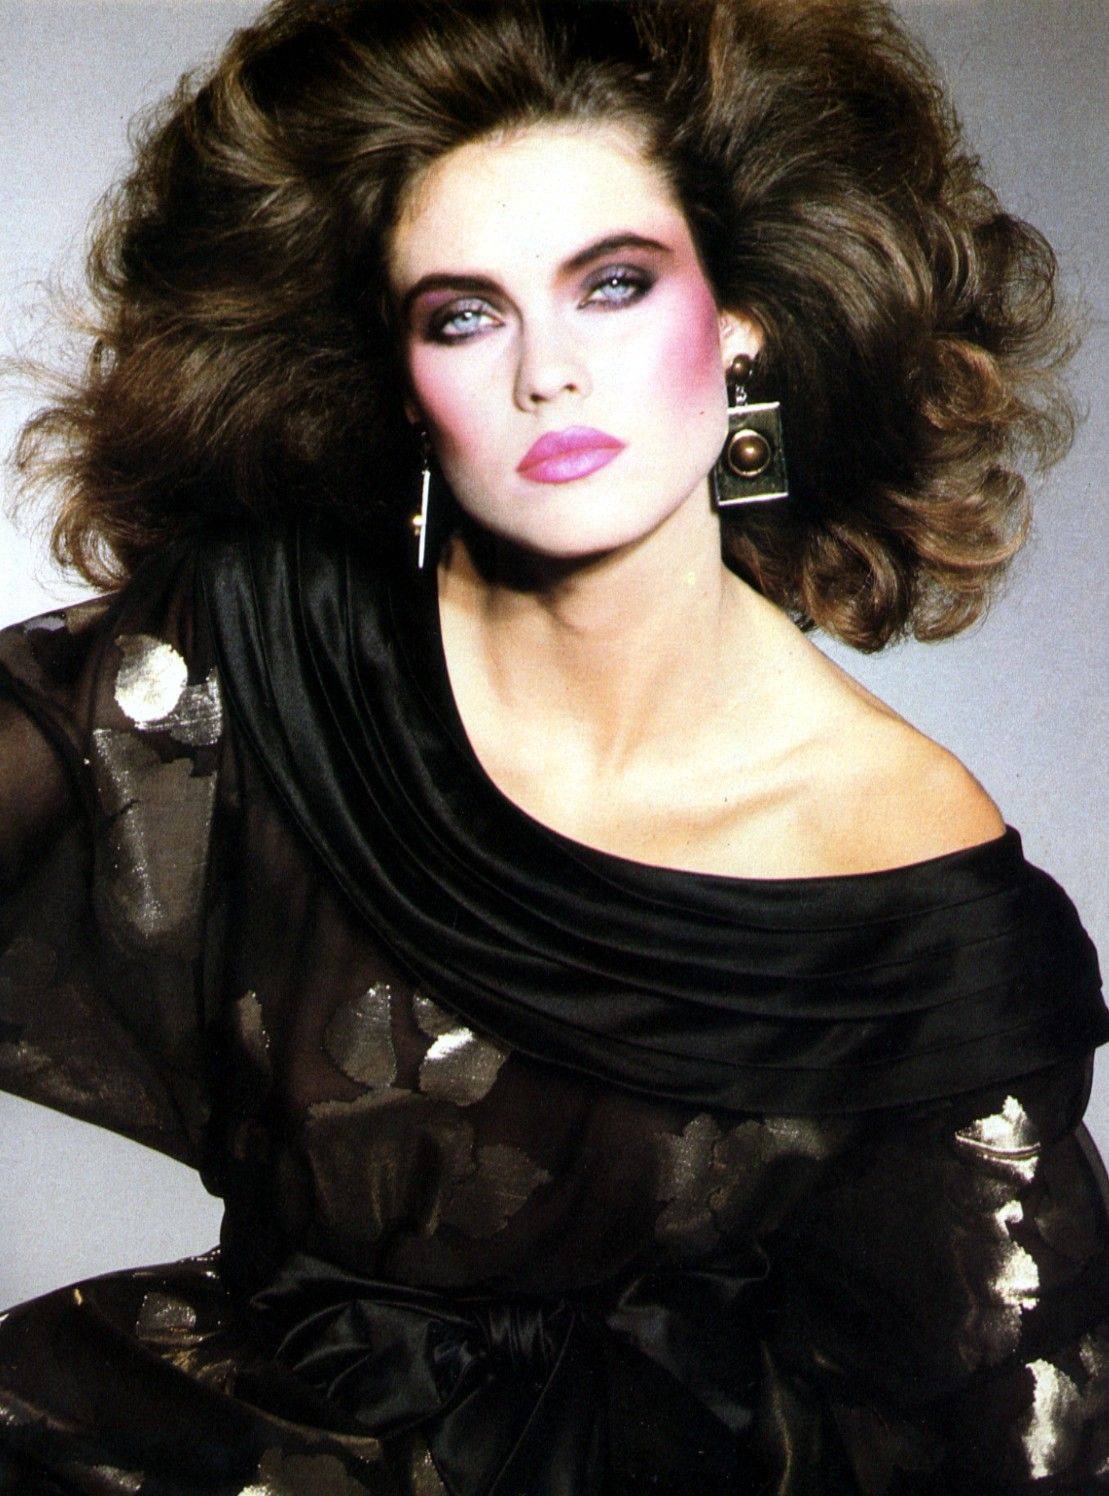 Иконы стиля 80-х: от принцессы дианы до мадонны | world fashion channel